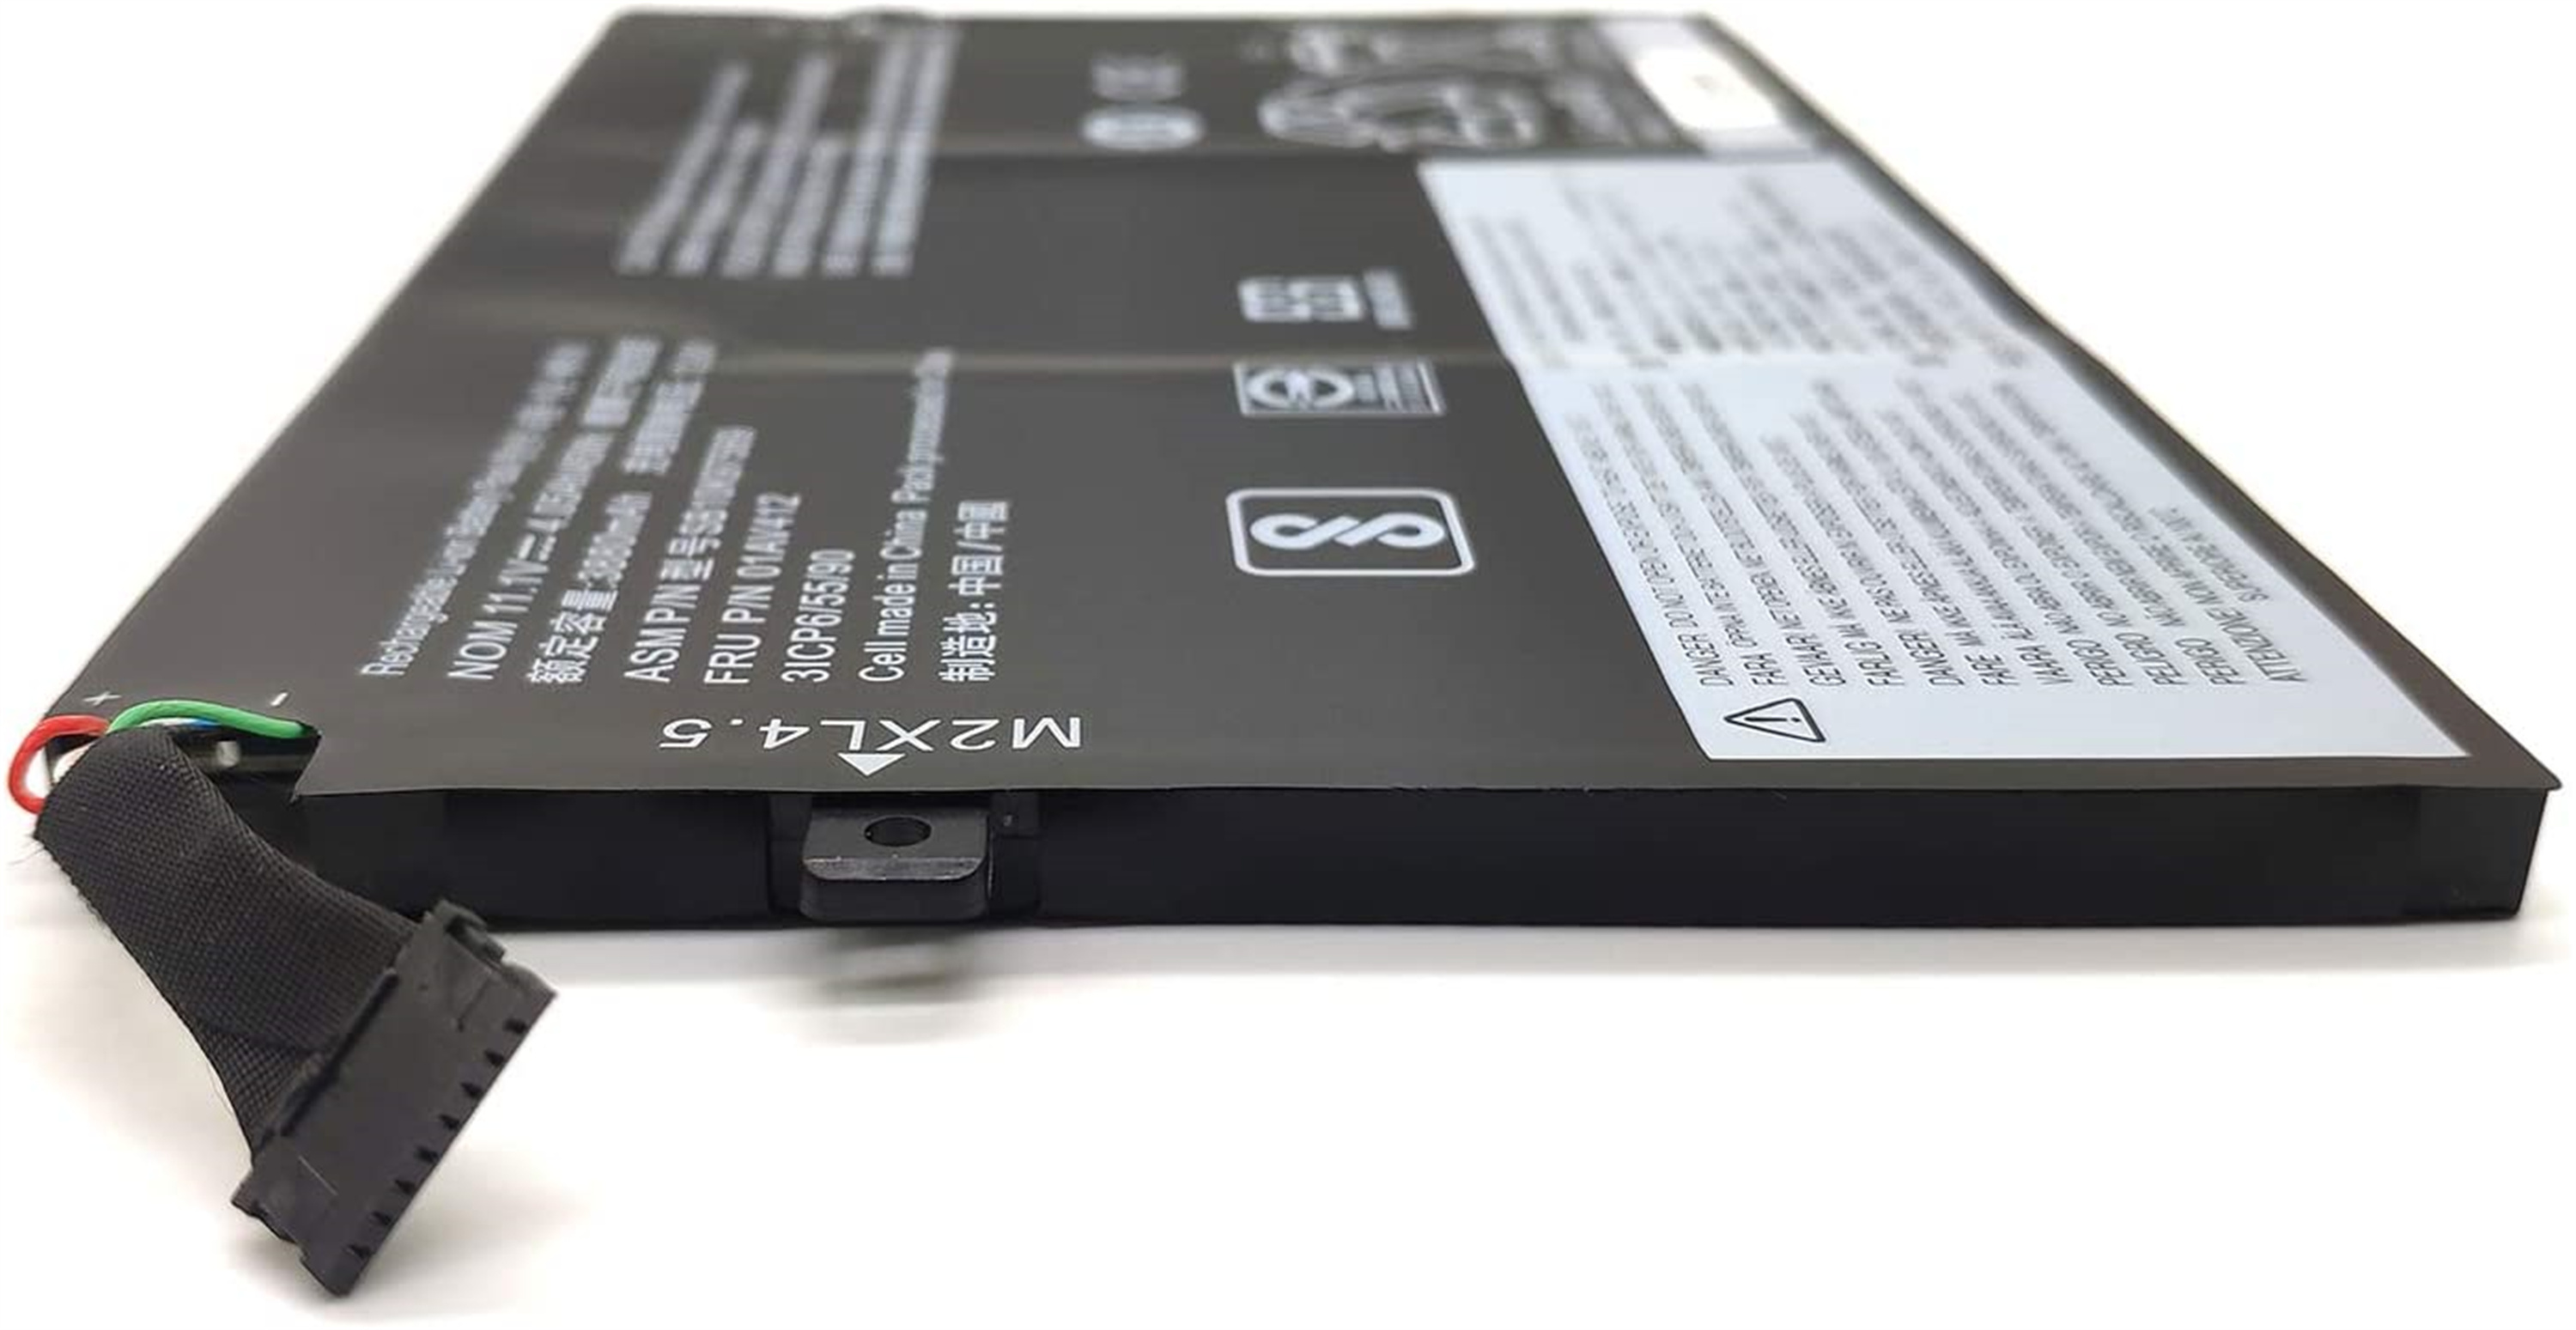 01AV412 rechargeable lithium ion Notebook battery Laptop battery LENOVO ThinkPad E475 E470C E470 Series 10.95V 45Wh 4.11Ah